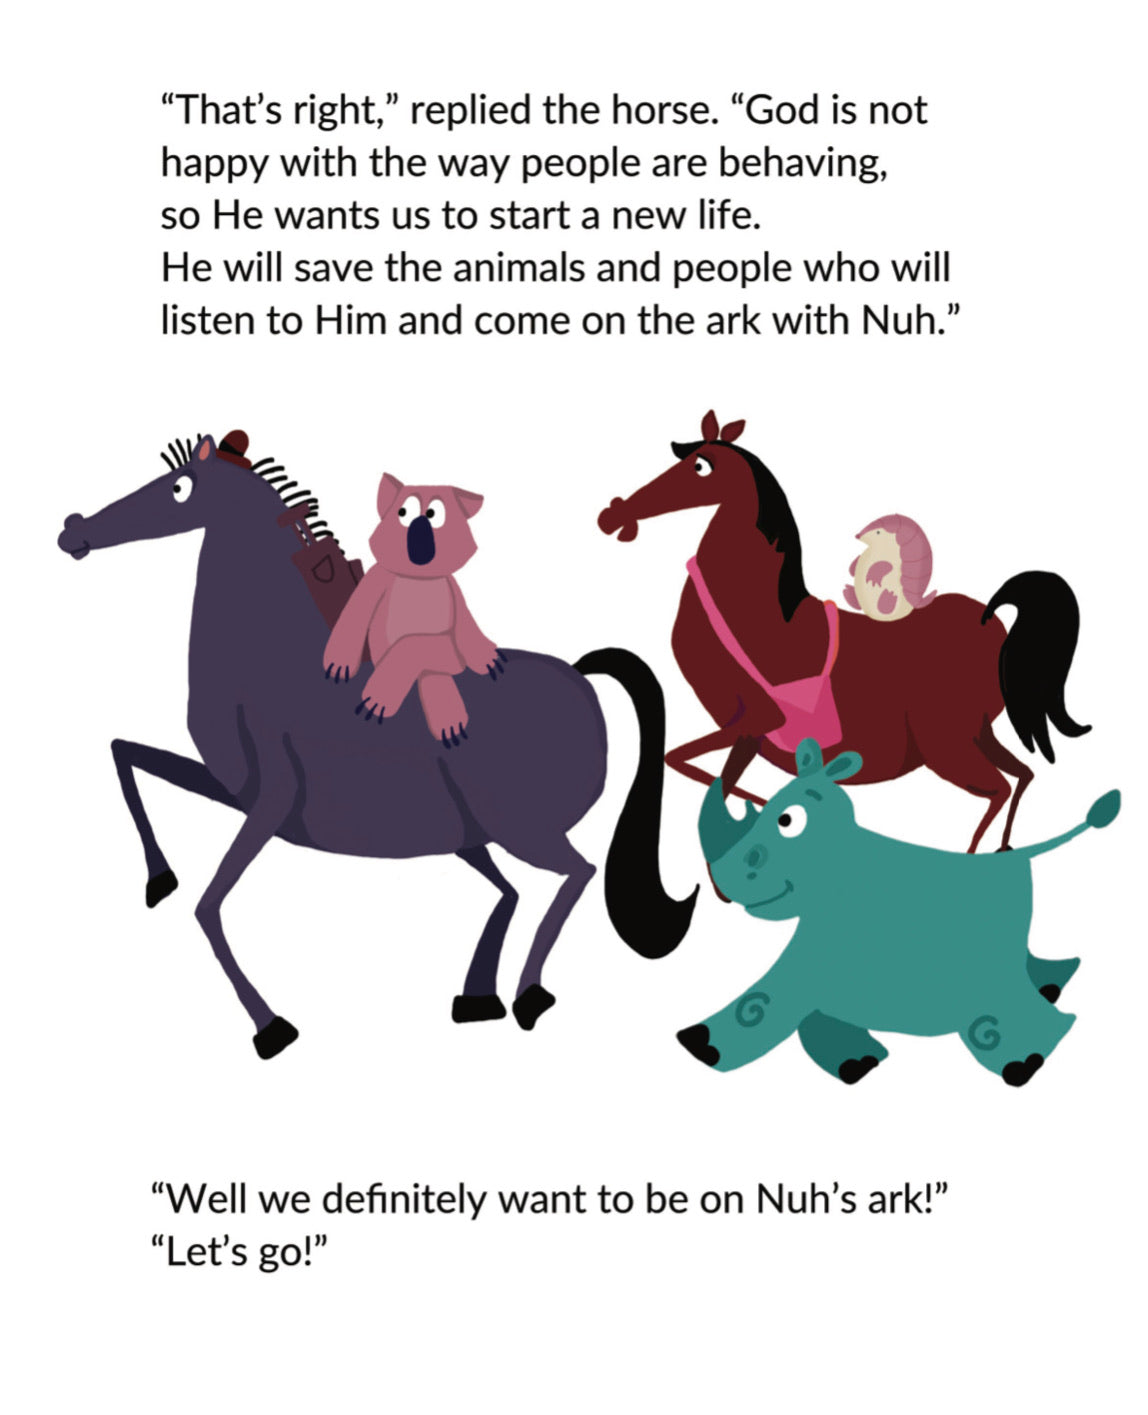 The Adventure of Nuh's Ark - Adventure Book | Crescent Moon Store